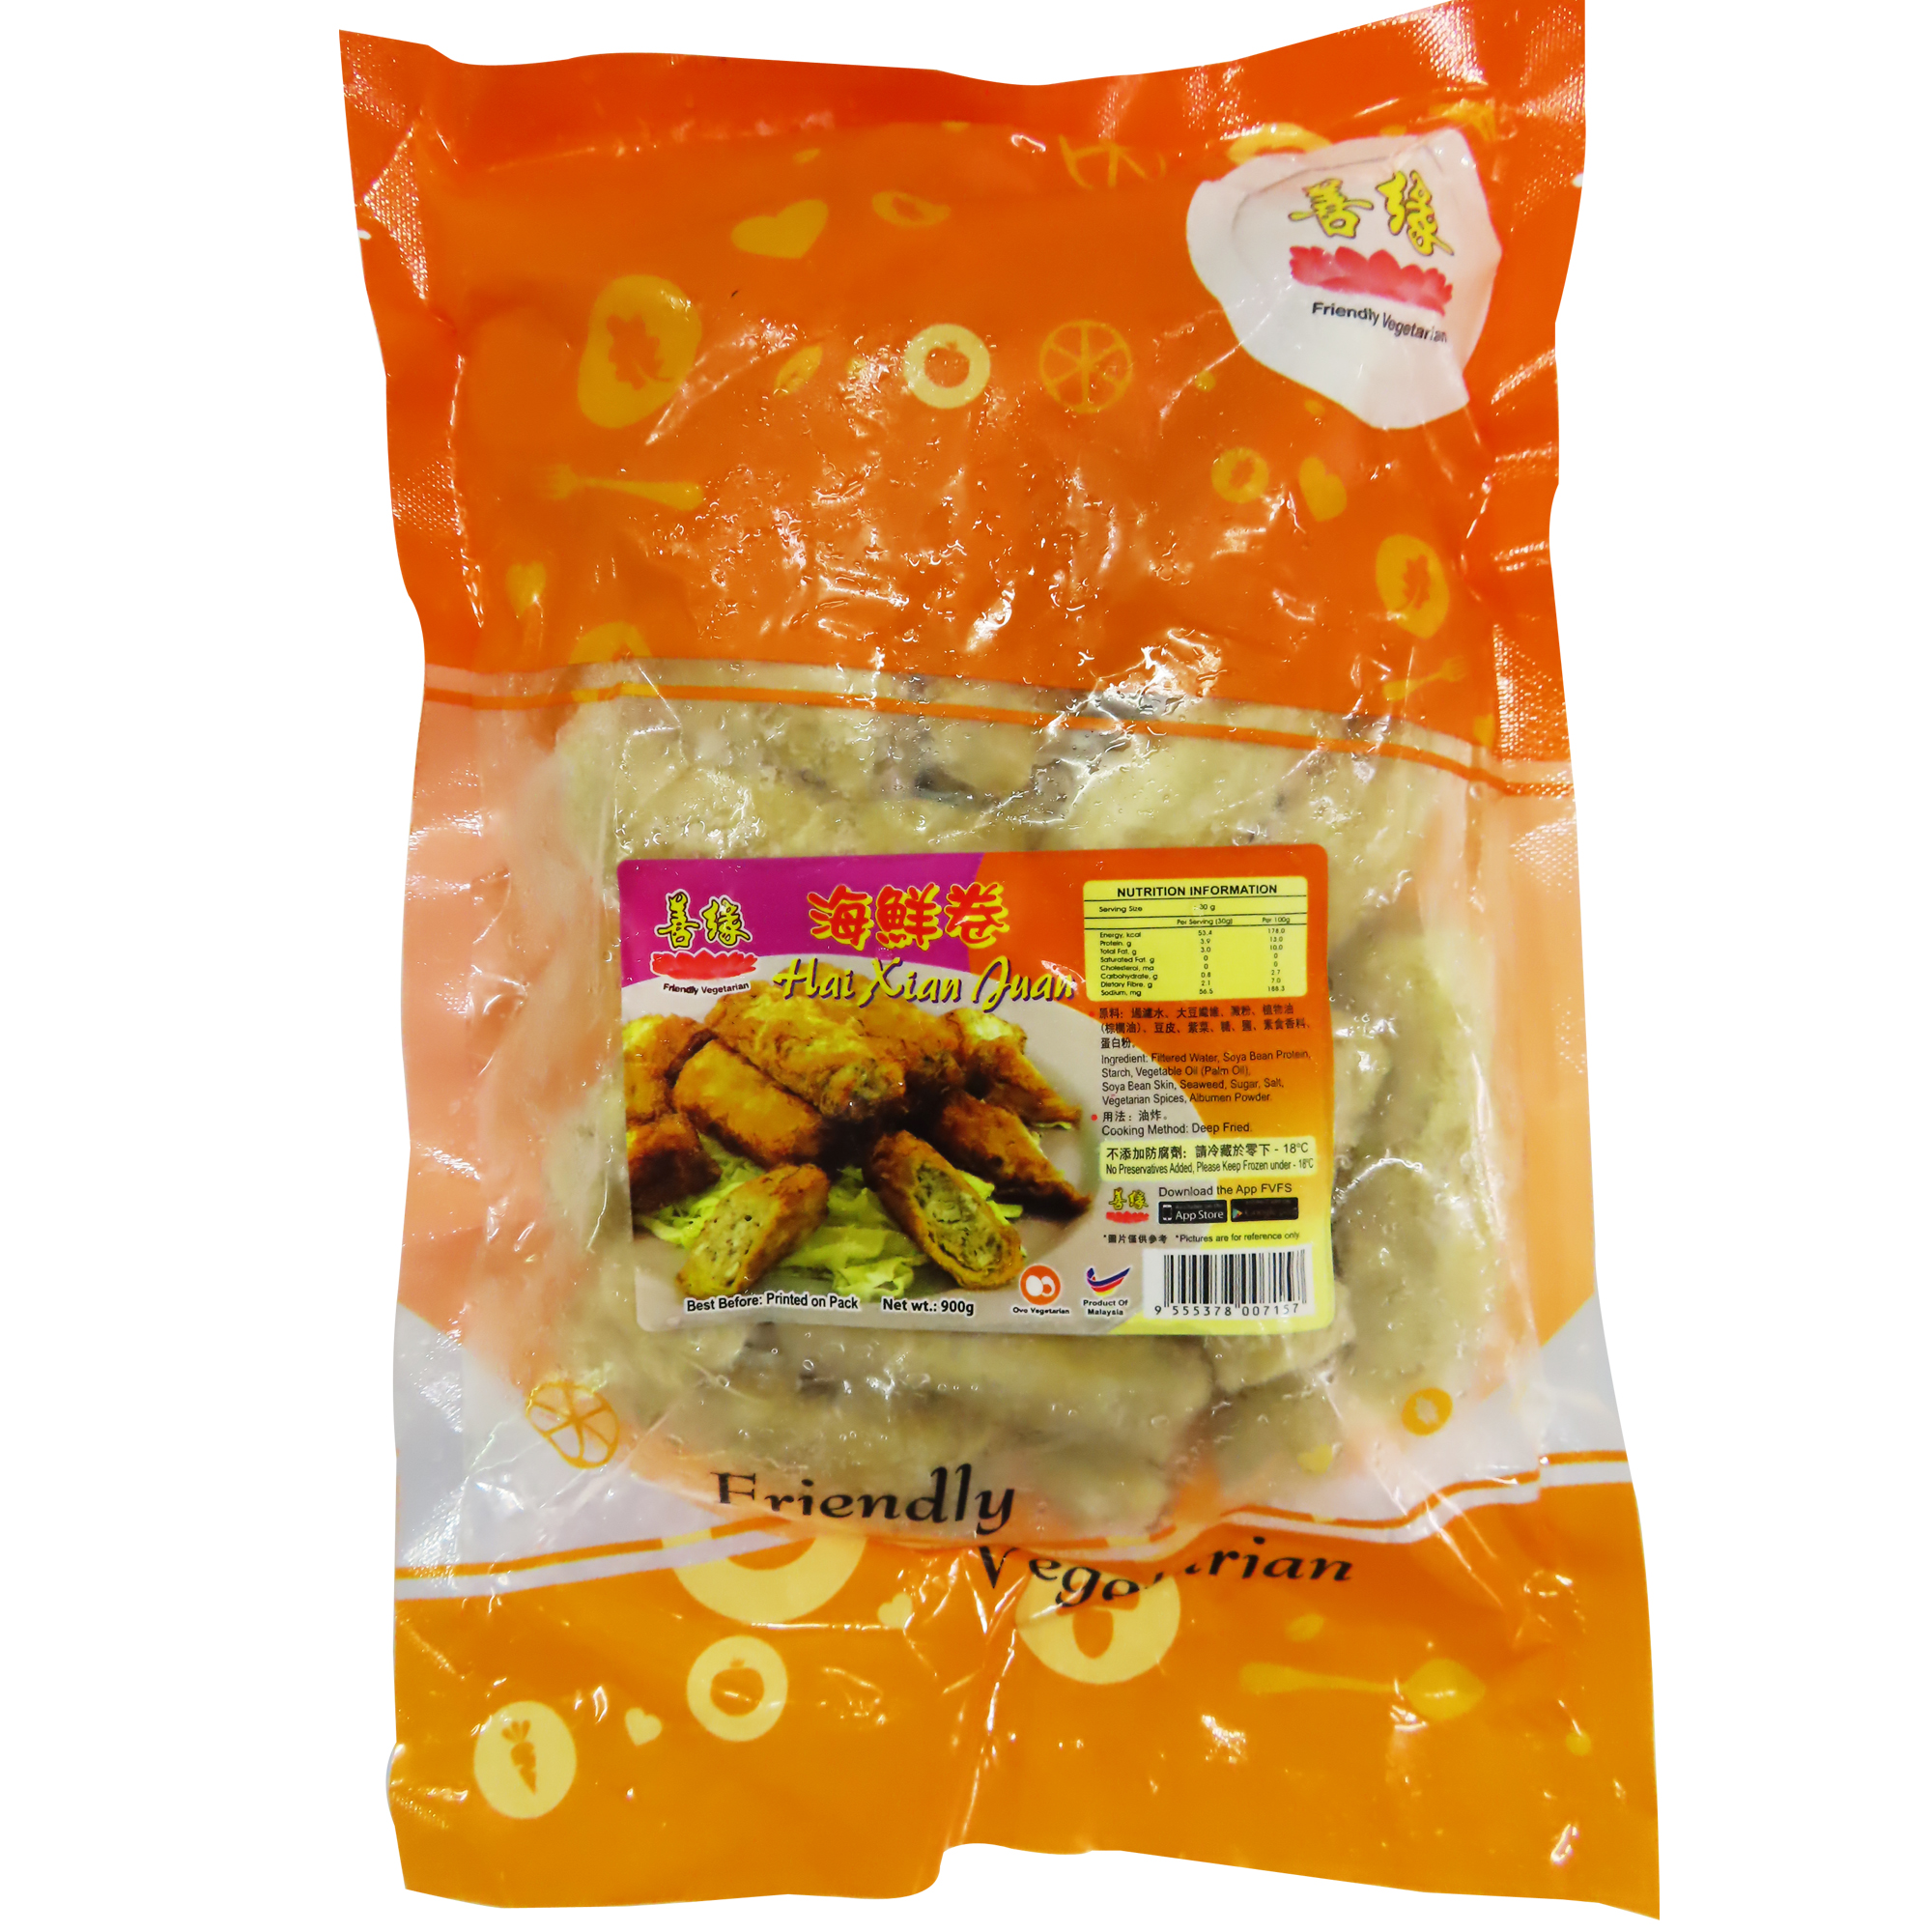 Image Vegetarian Seafood Roll hai Xian Juan 善缘-海鲜卷 900grams